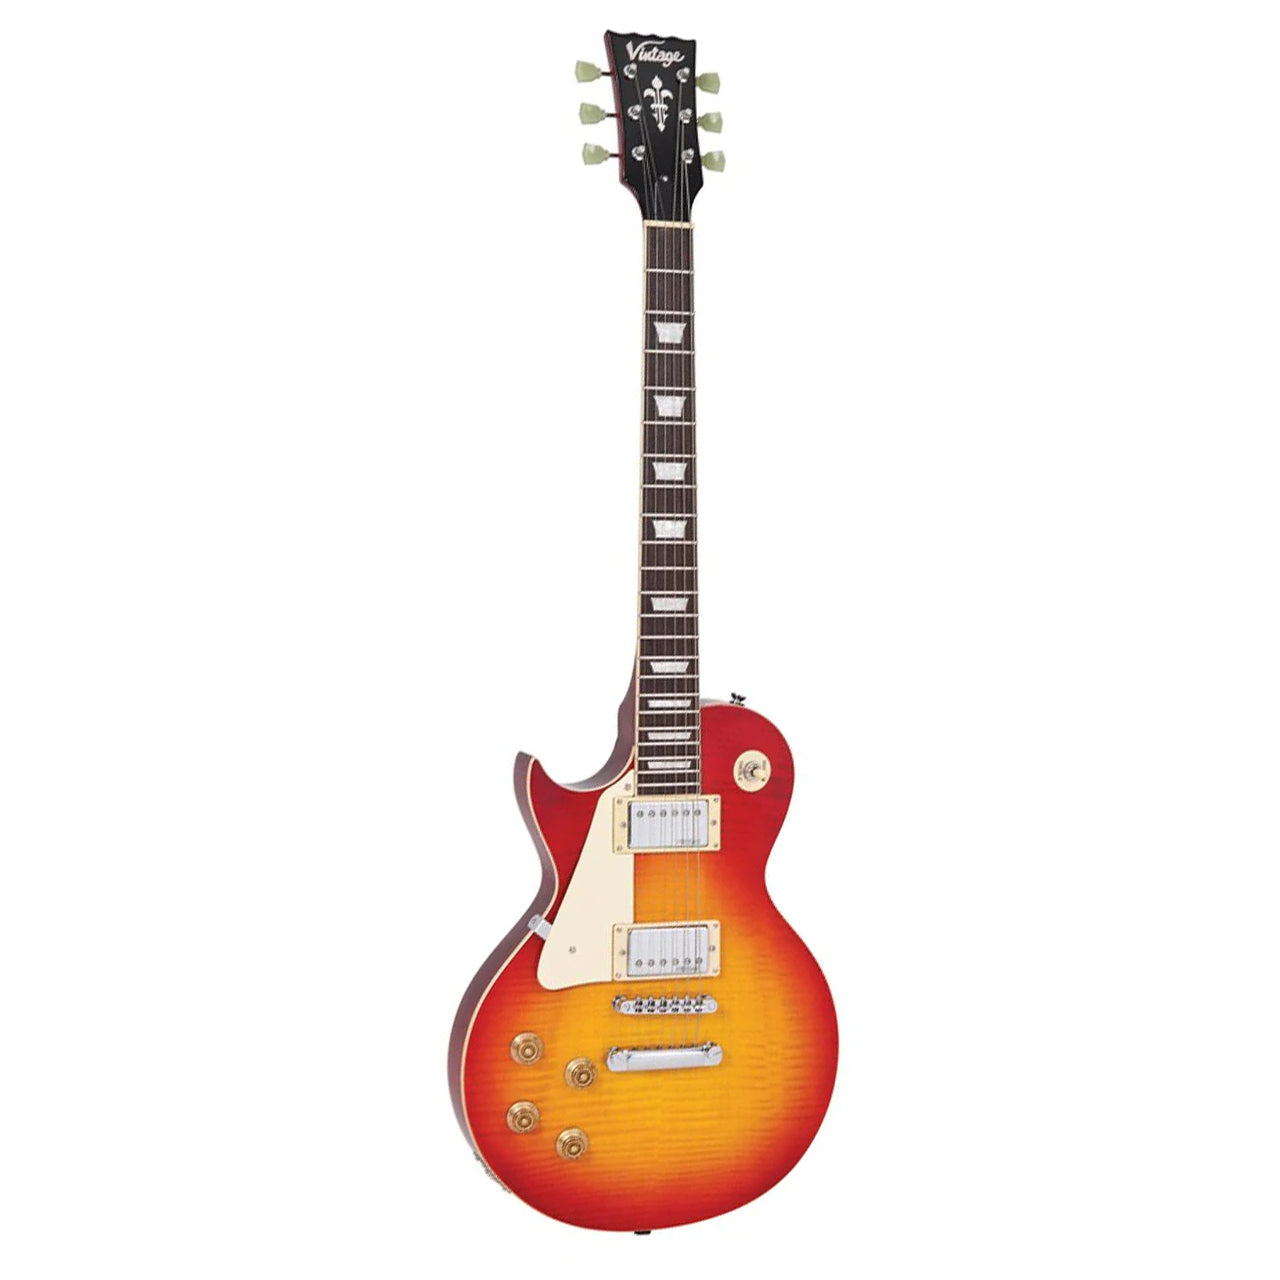 Vintage Guitars LV100CS Left-Handed ReIssued LP Style Electric Guitar - Flame Top Cherry Sunburst